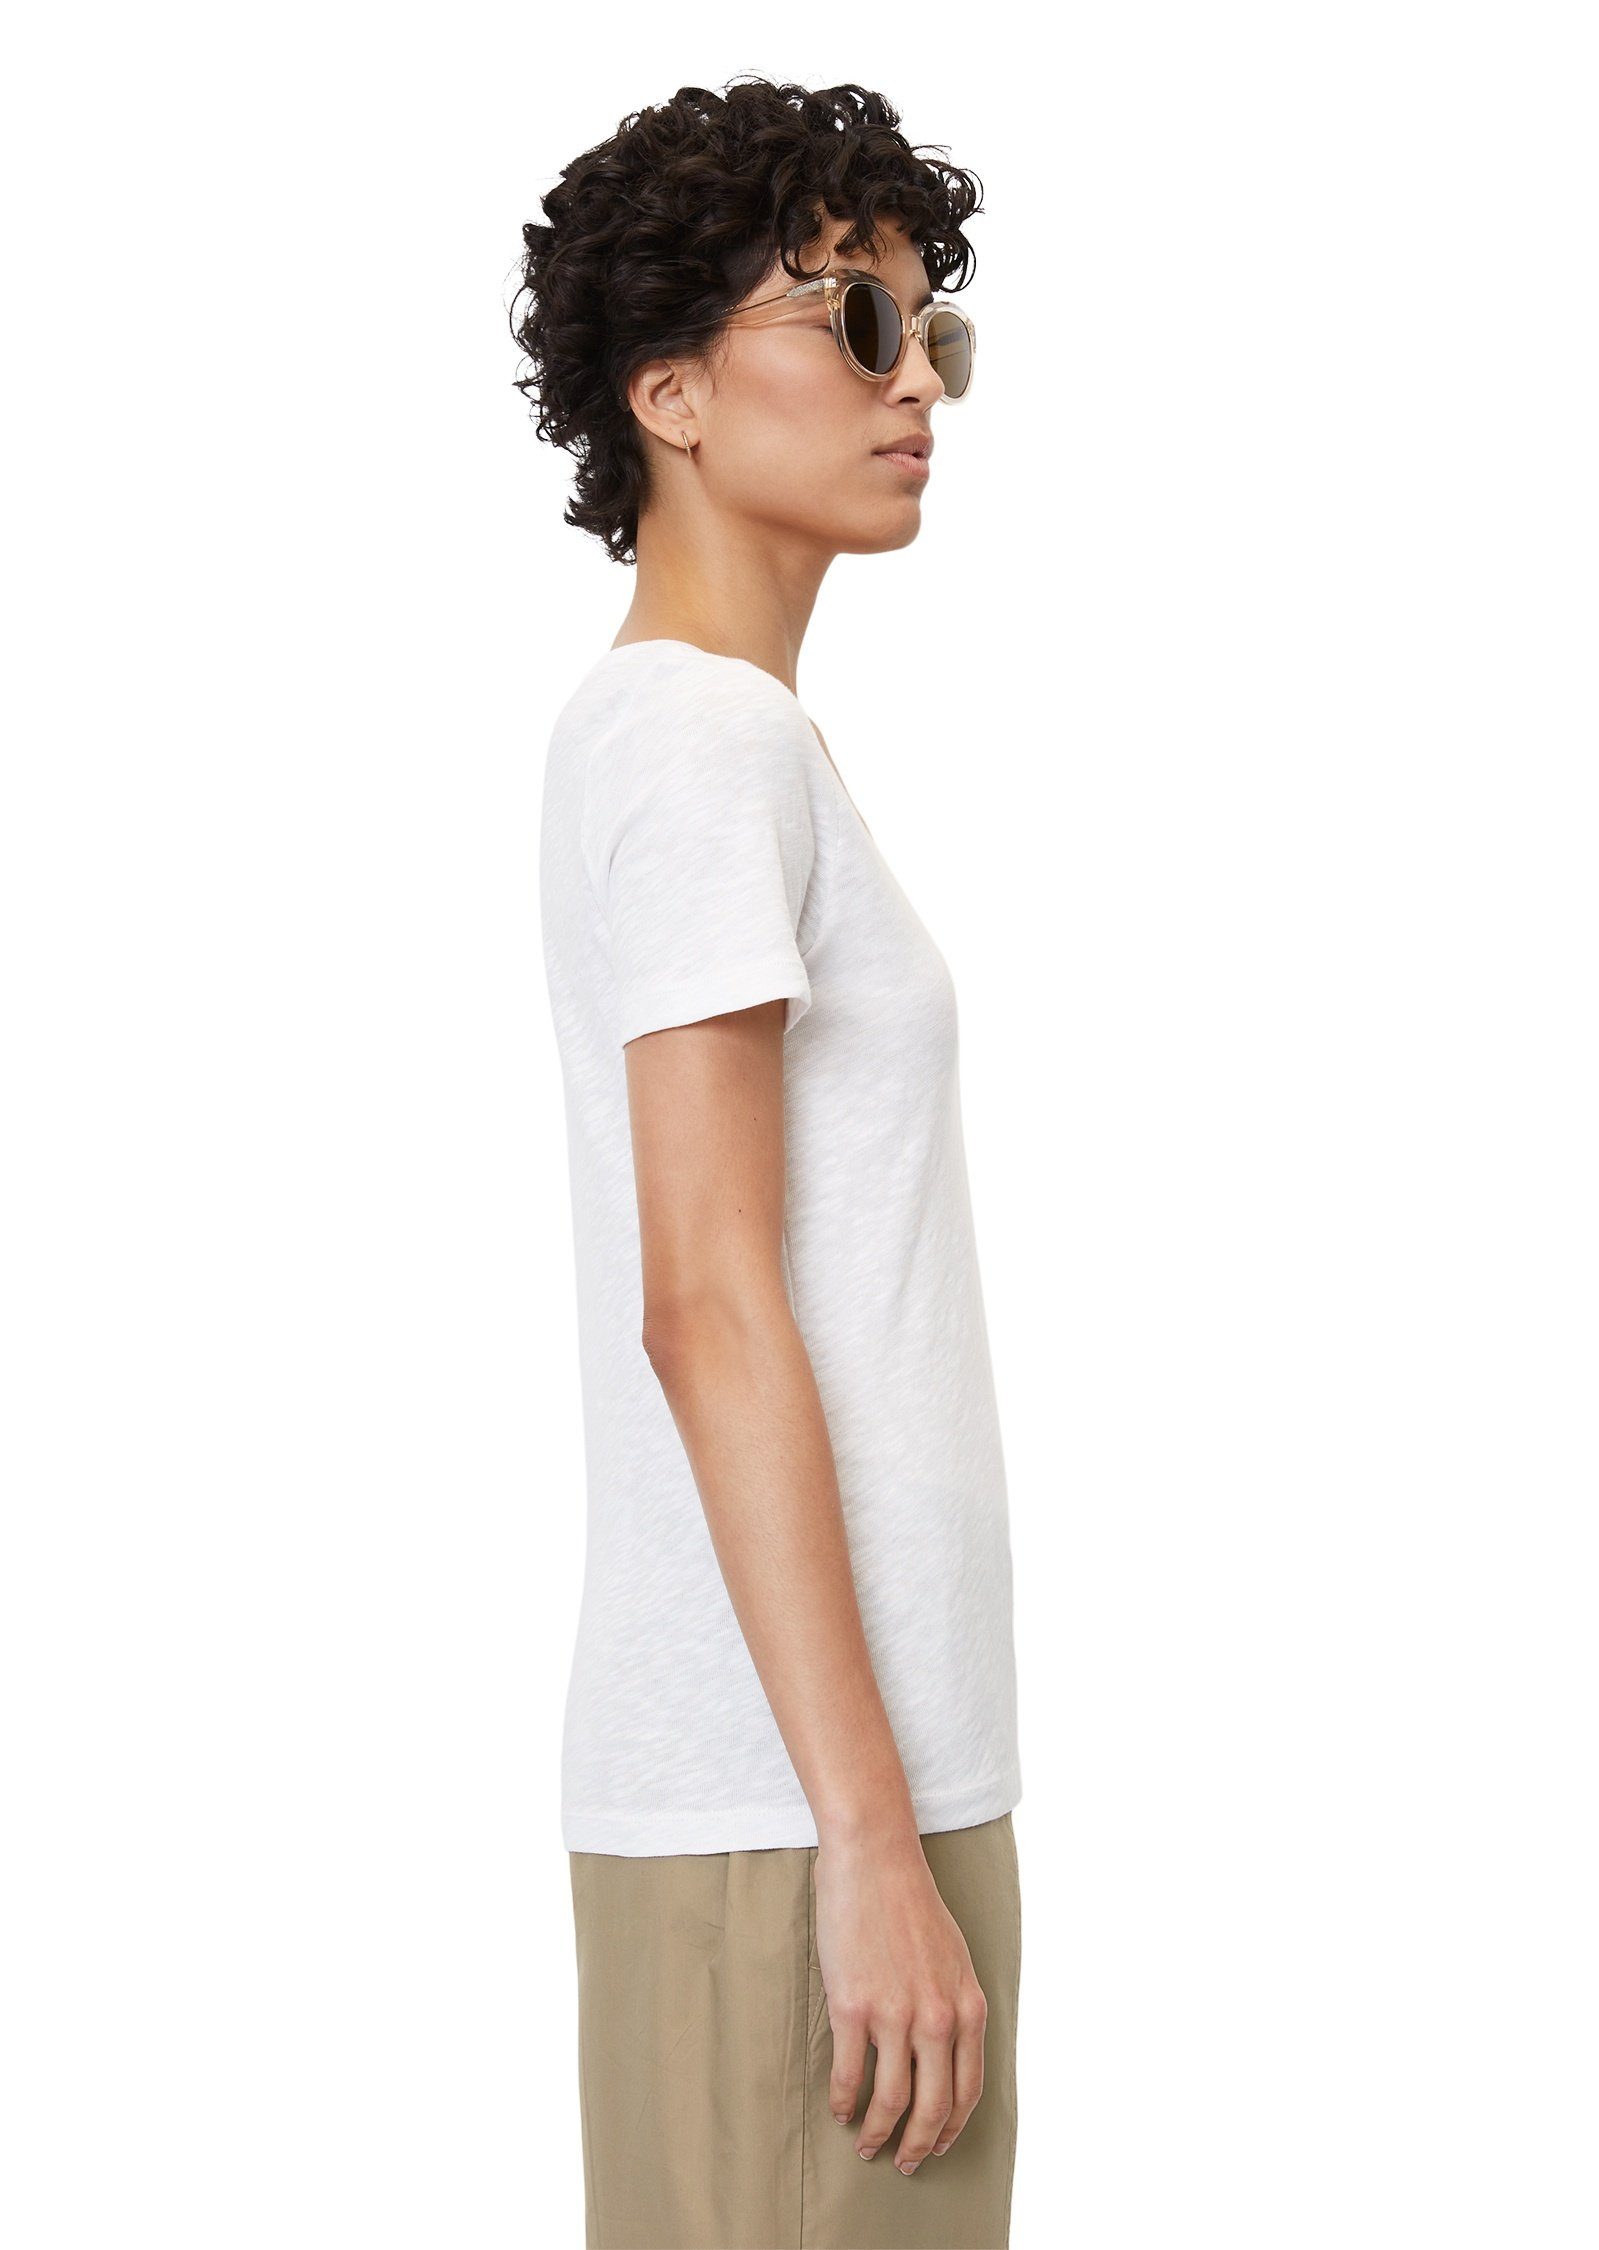 Marc O'Polo T-Shirt aus Organic Slub weiß Jersey Cotton